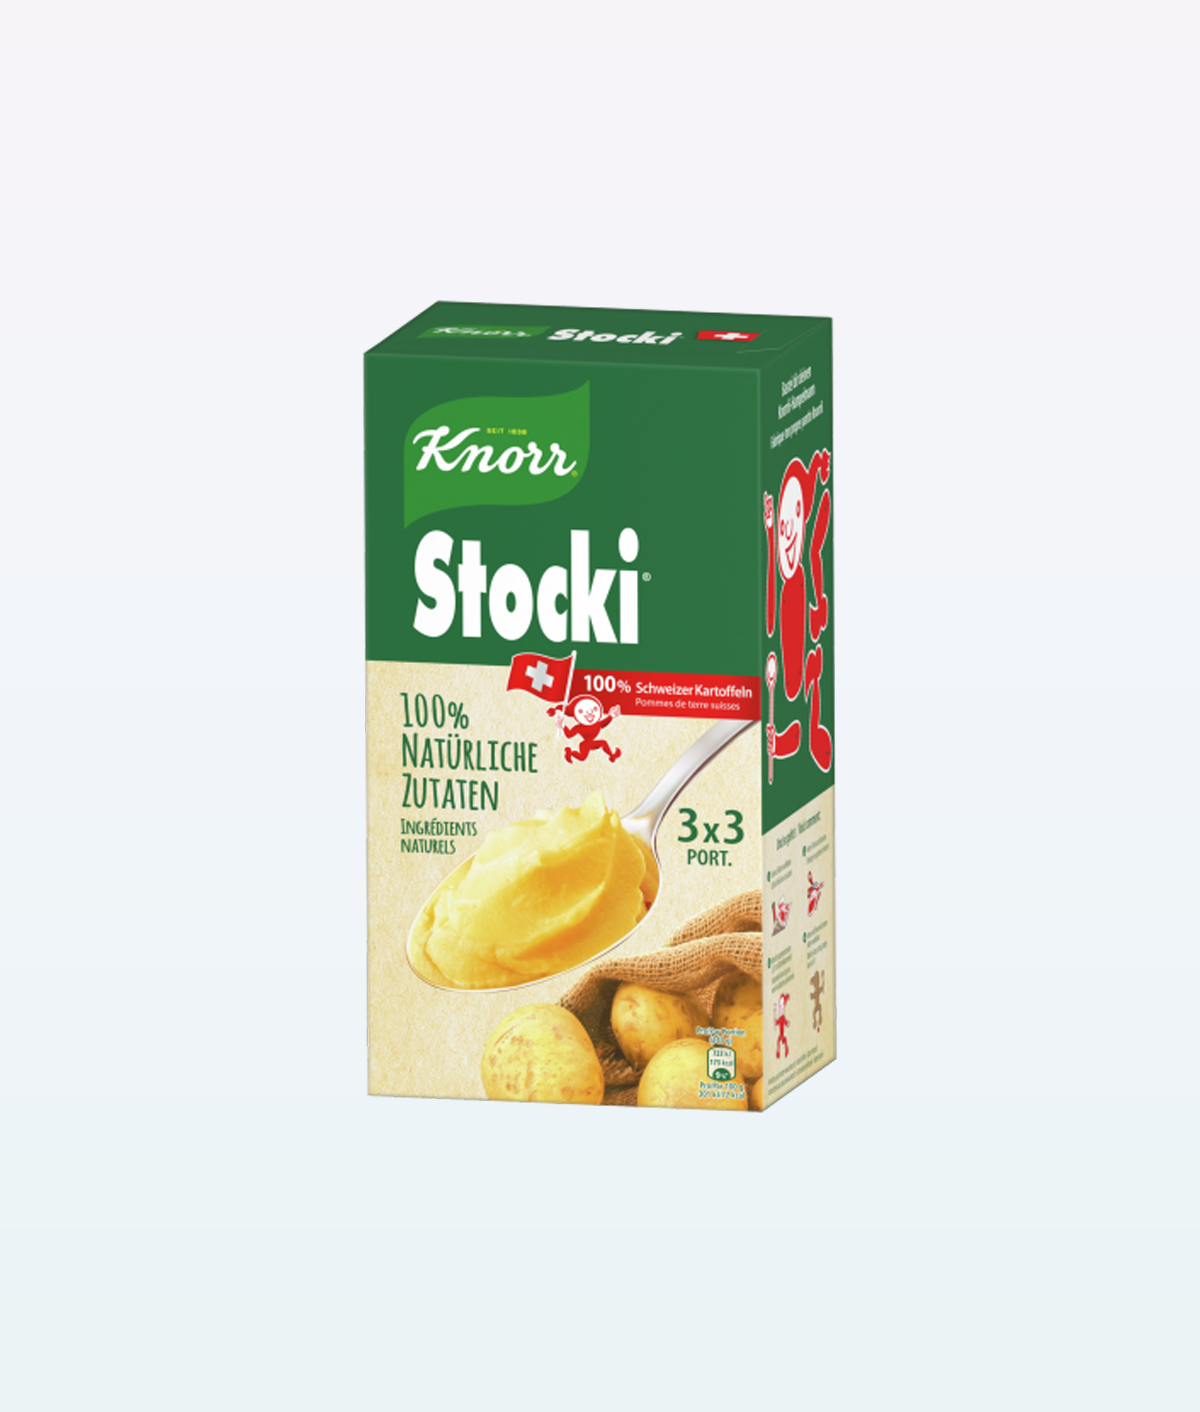 Knorr Stöcki 3x3 1